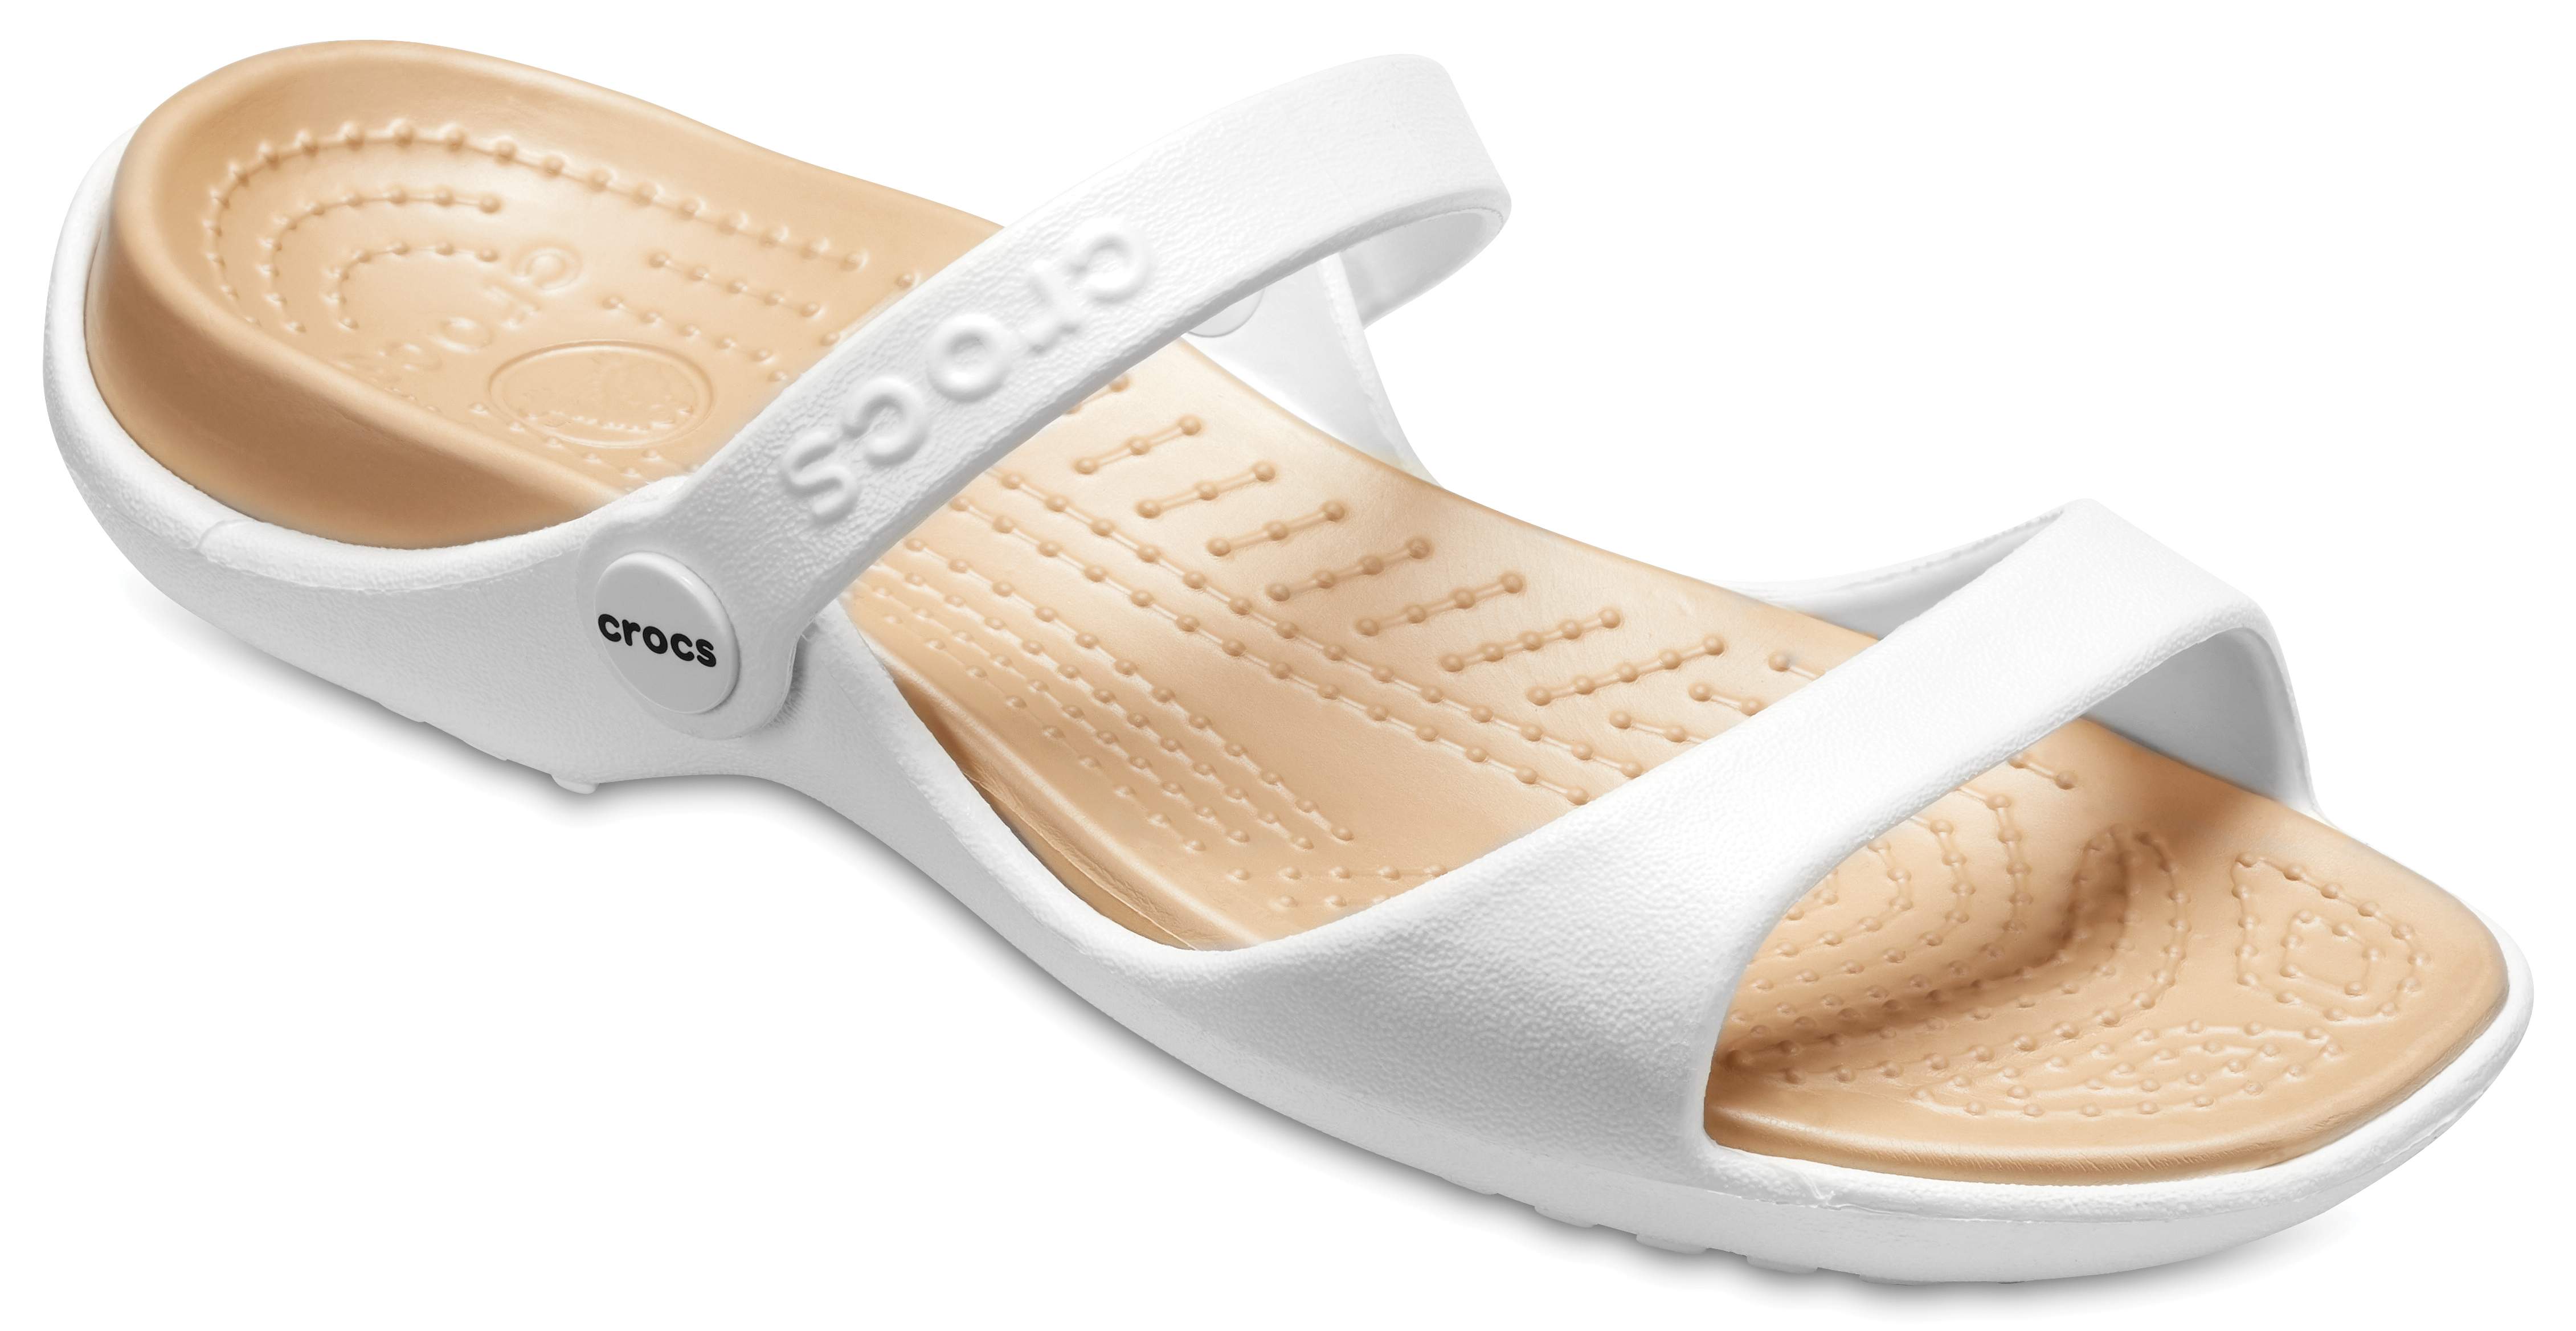 crocs cleo sandal ladies